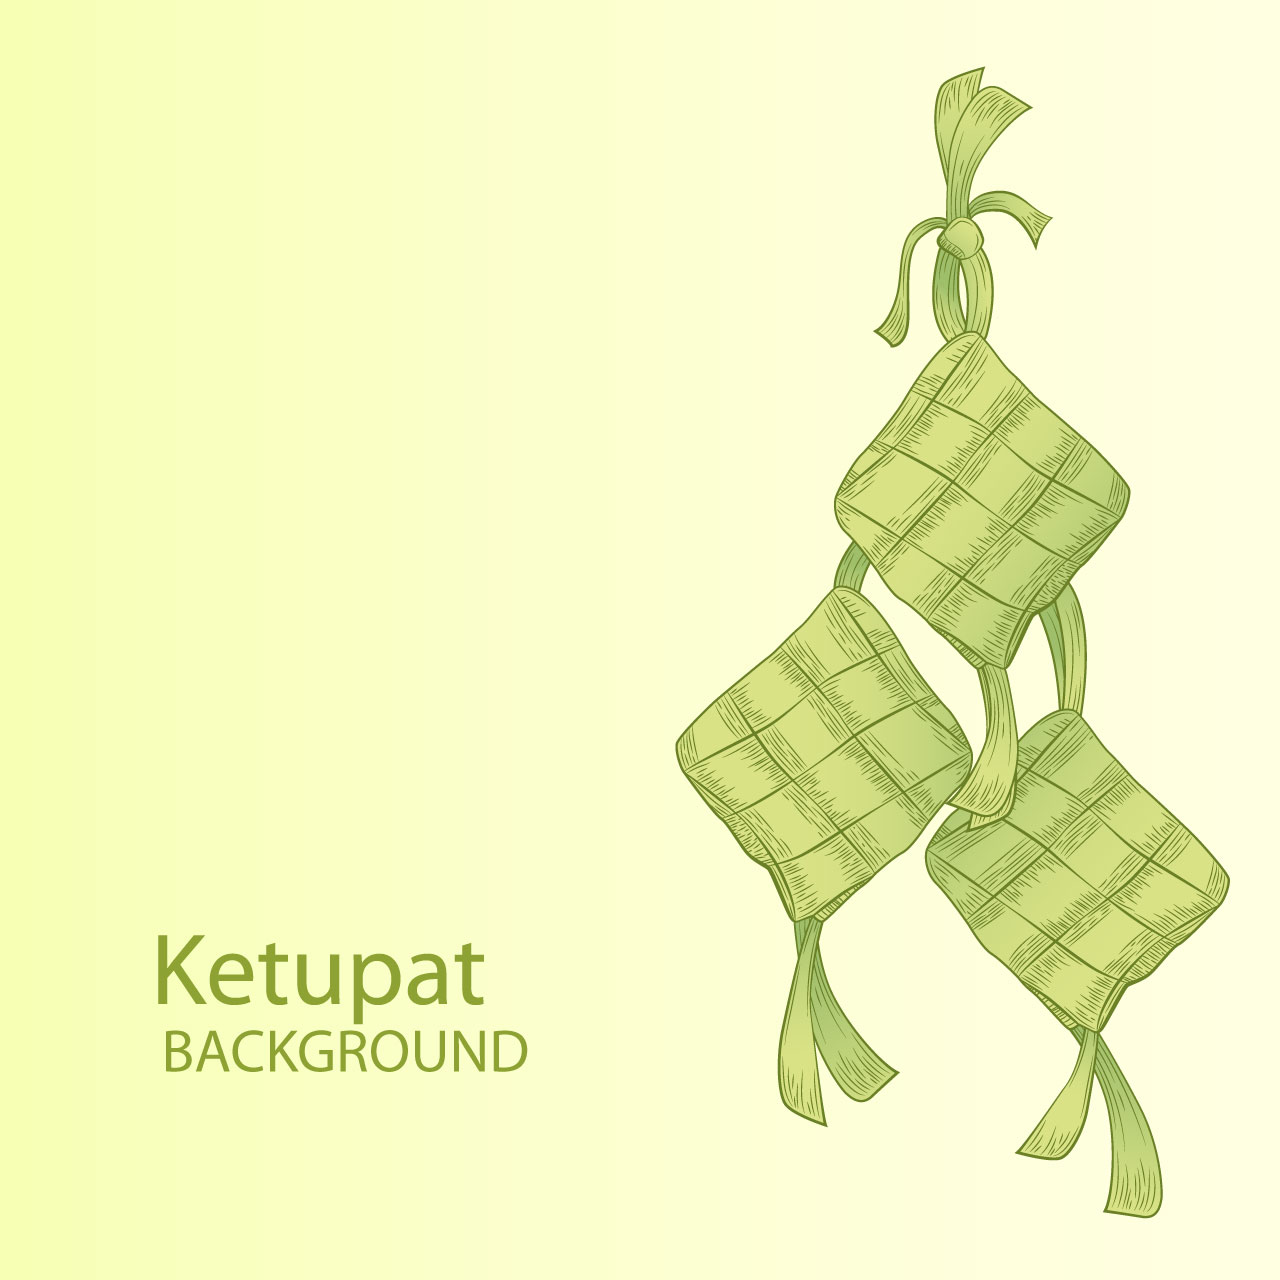 Philippine clipart food ketupat hand drawing cartoon illustration image